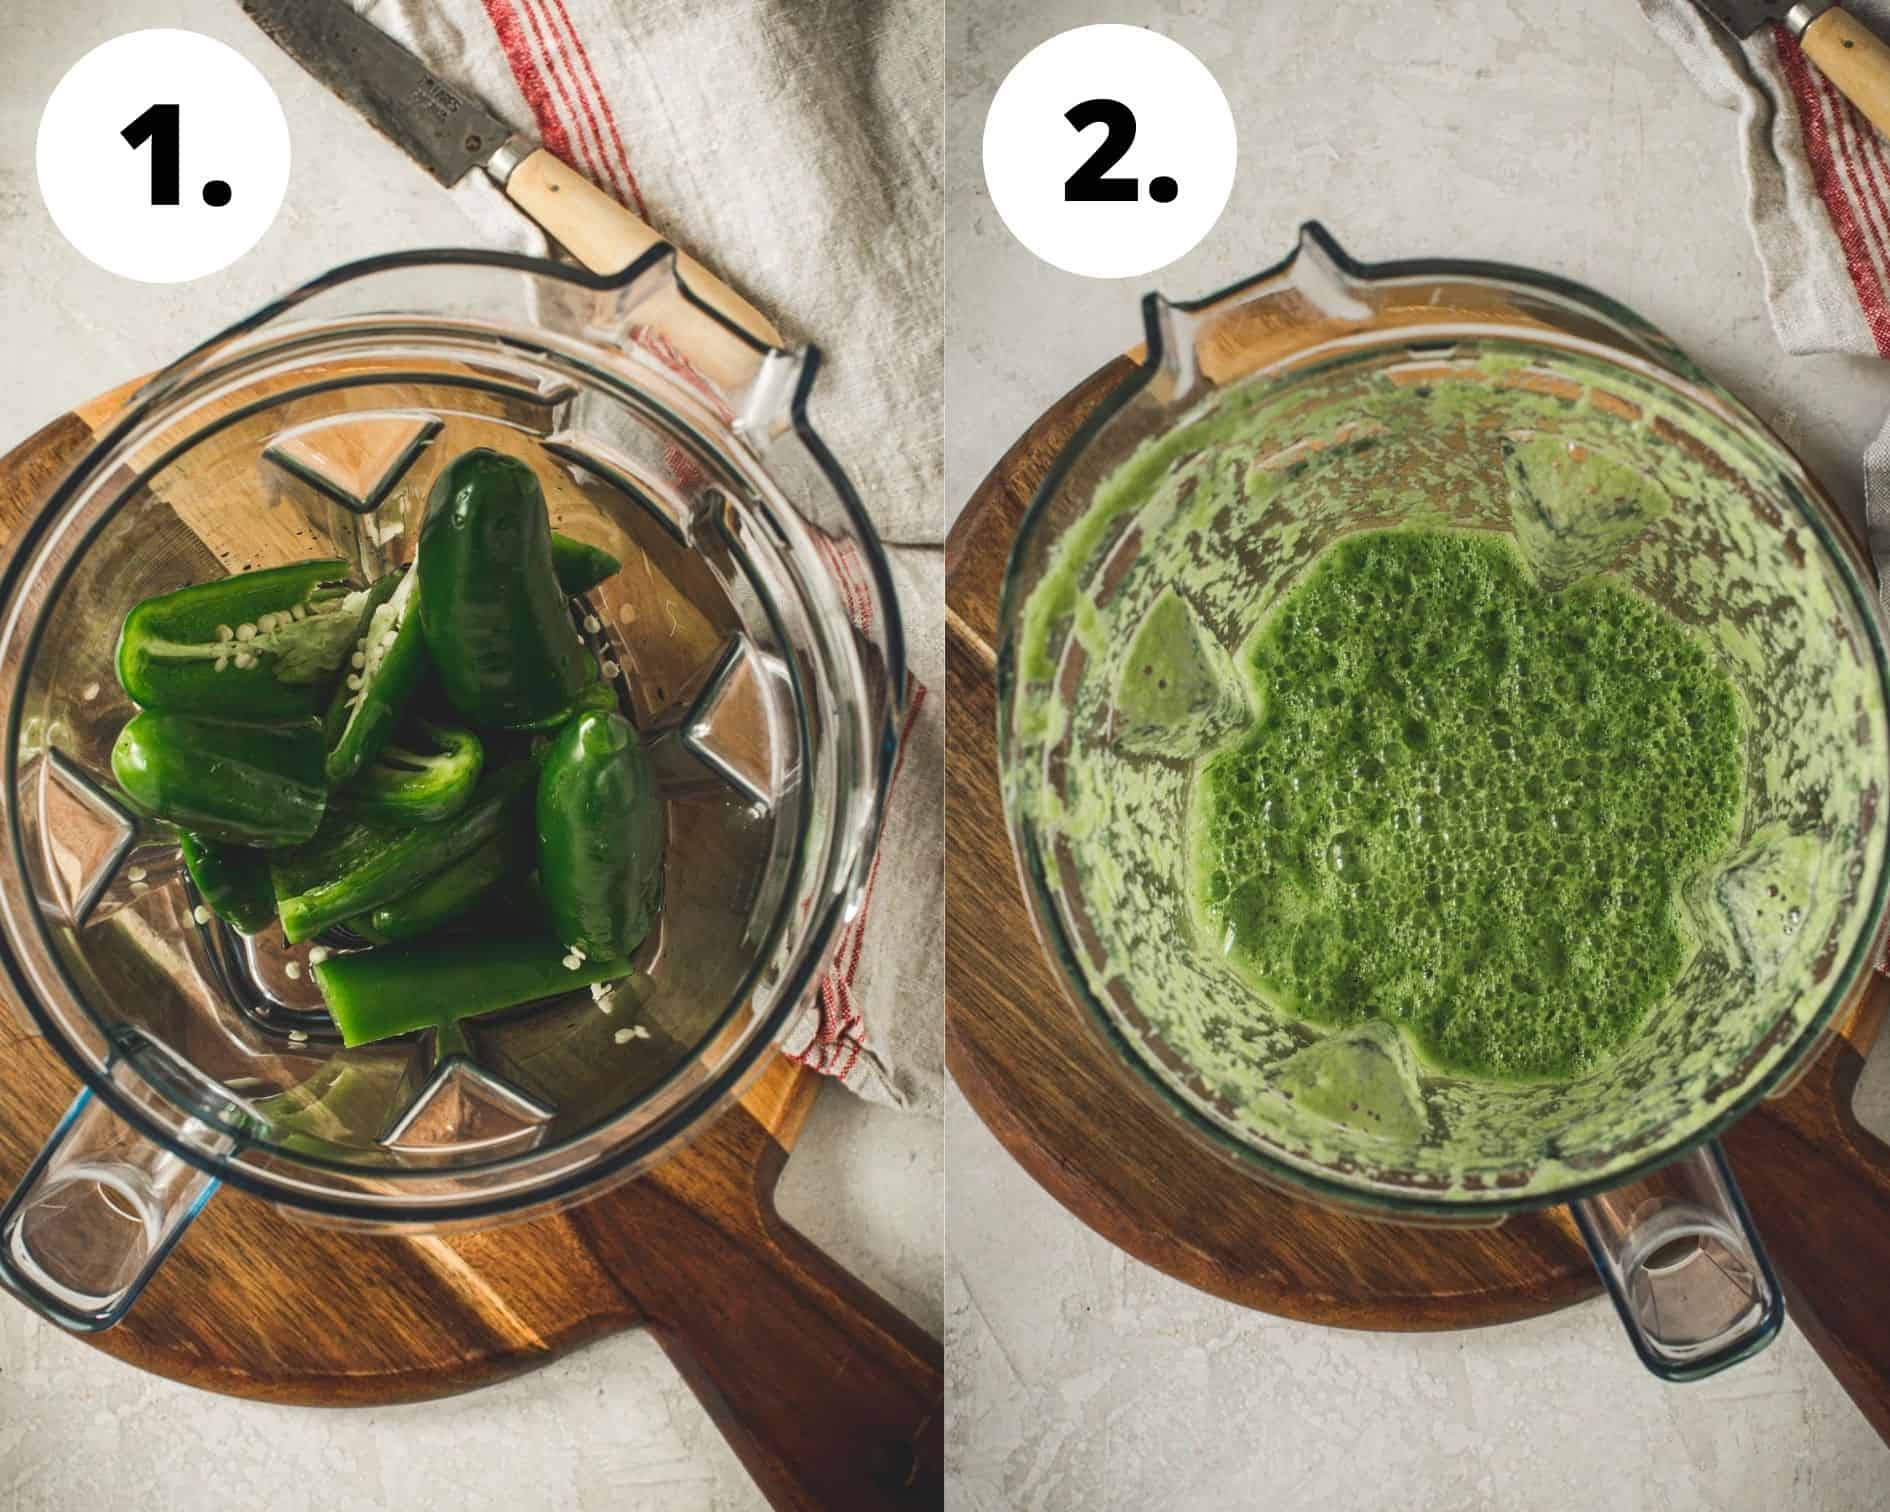 Jalapeño pepper jelly recipe process steps 1 and 2.